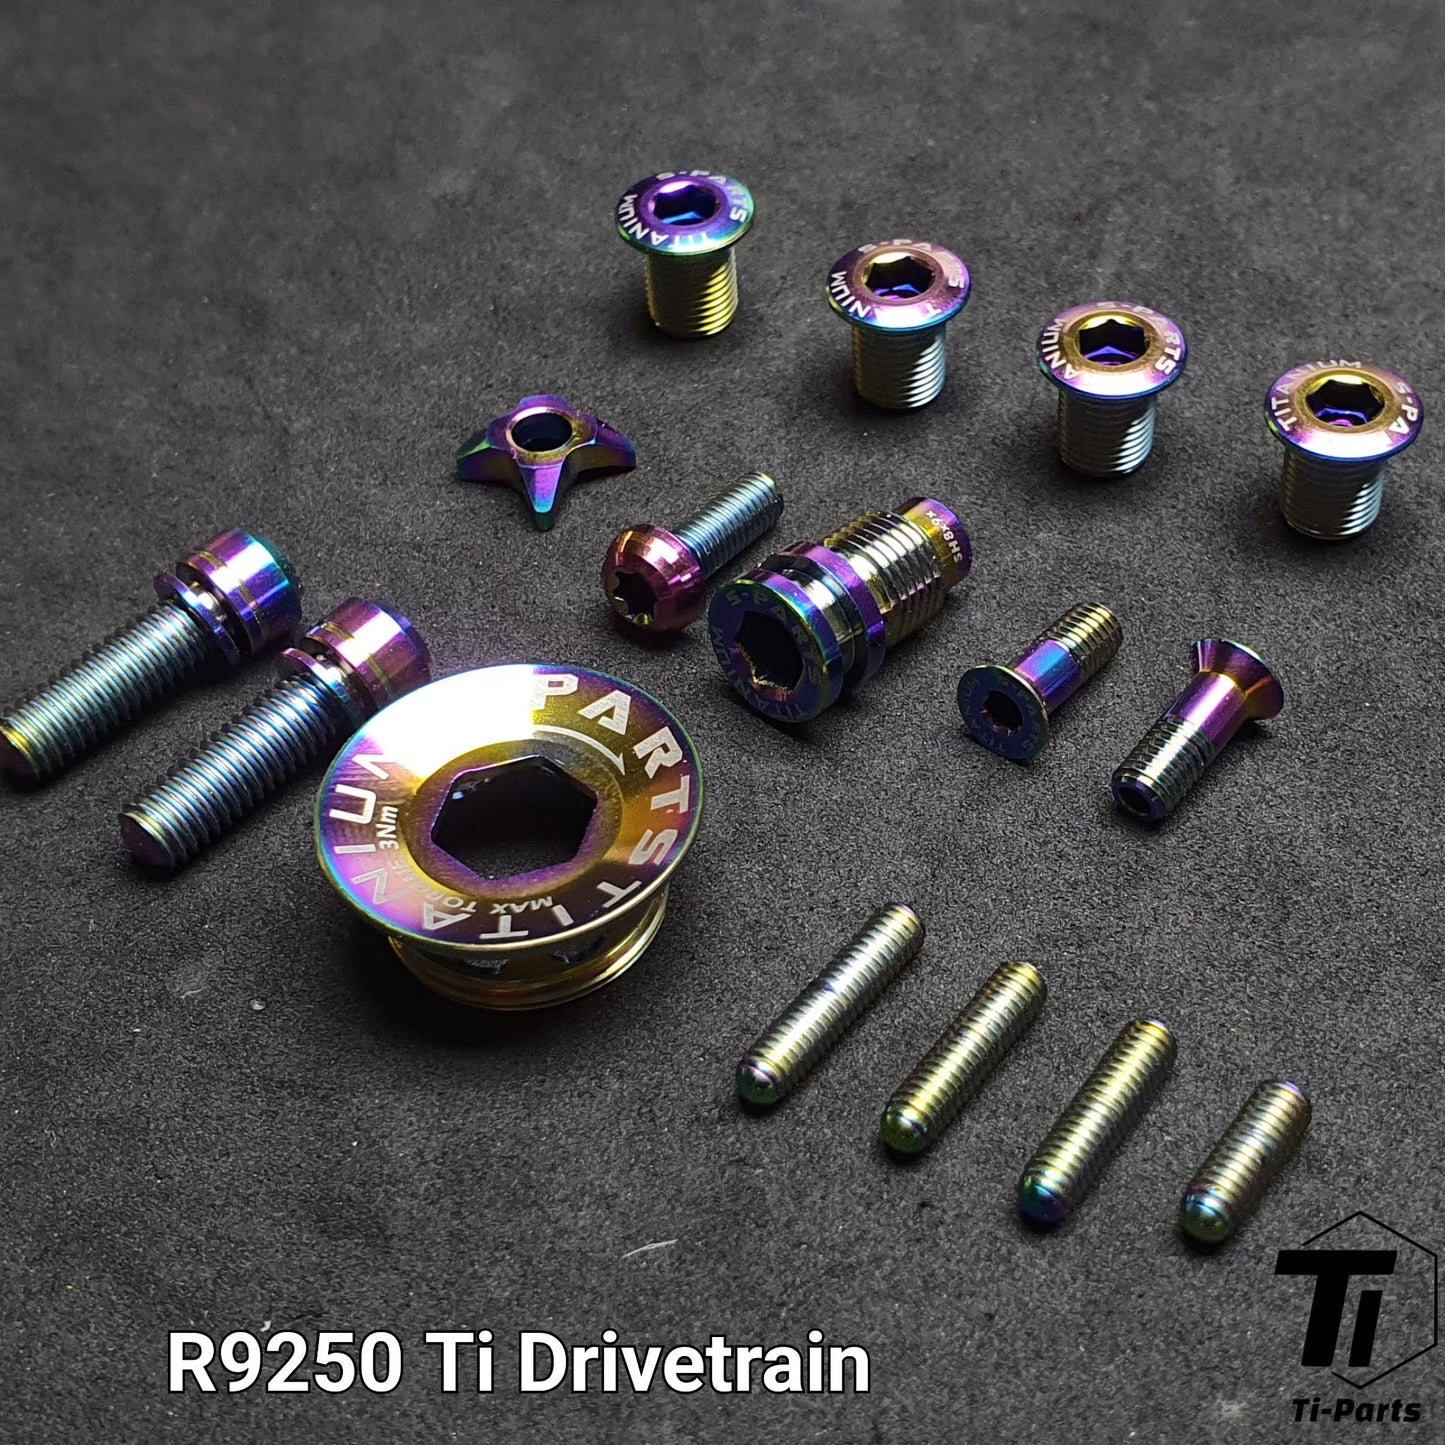 R9270 R8170 R7170 Shimano용 티타늄 업그레이드 키트 | Dura Ace Ultegra 105 12s R9200 R8150 드라이브트레인 브레이크 | 티타늄 나사